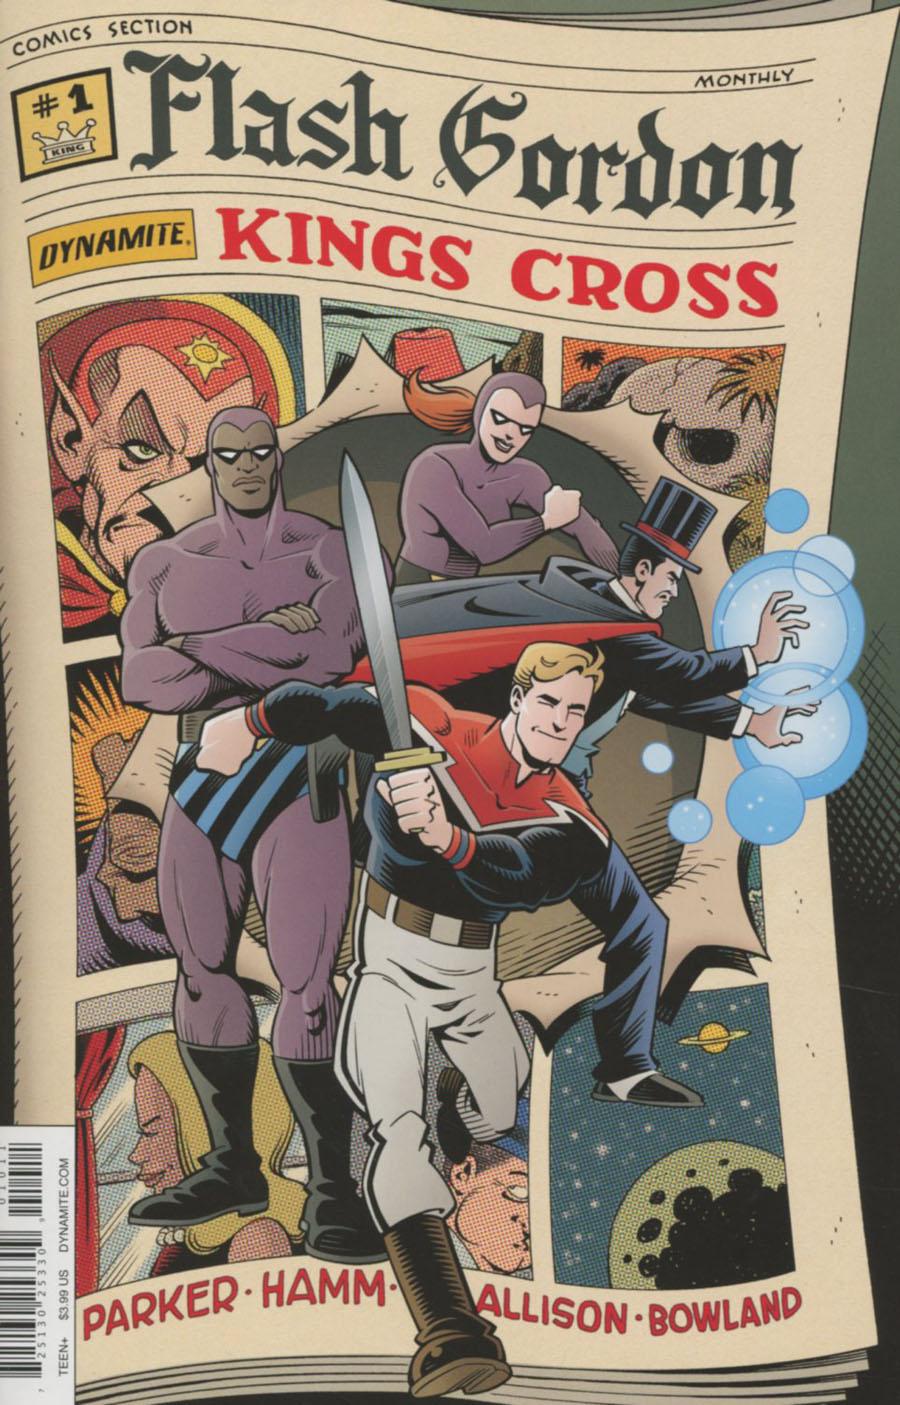 Flash Gordon Kings Cross Vol. 1 #1